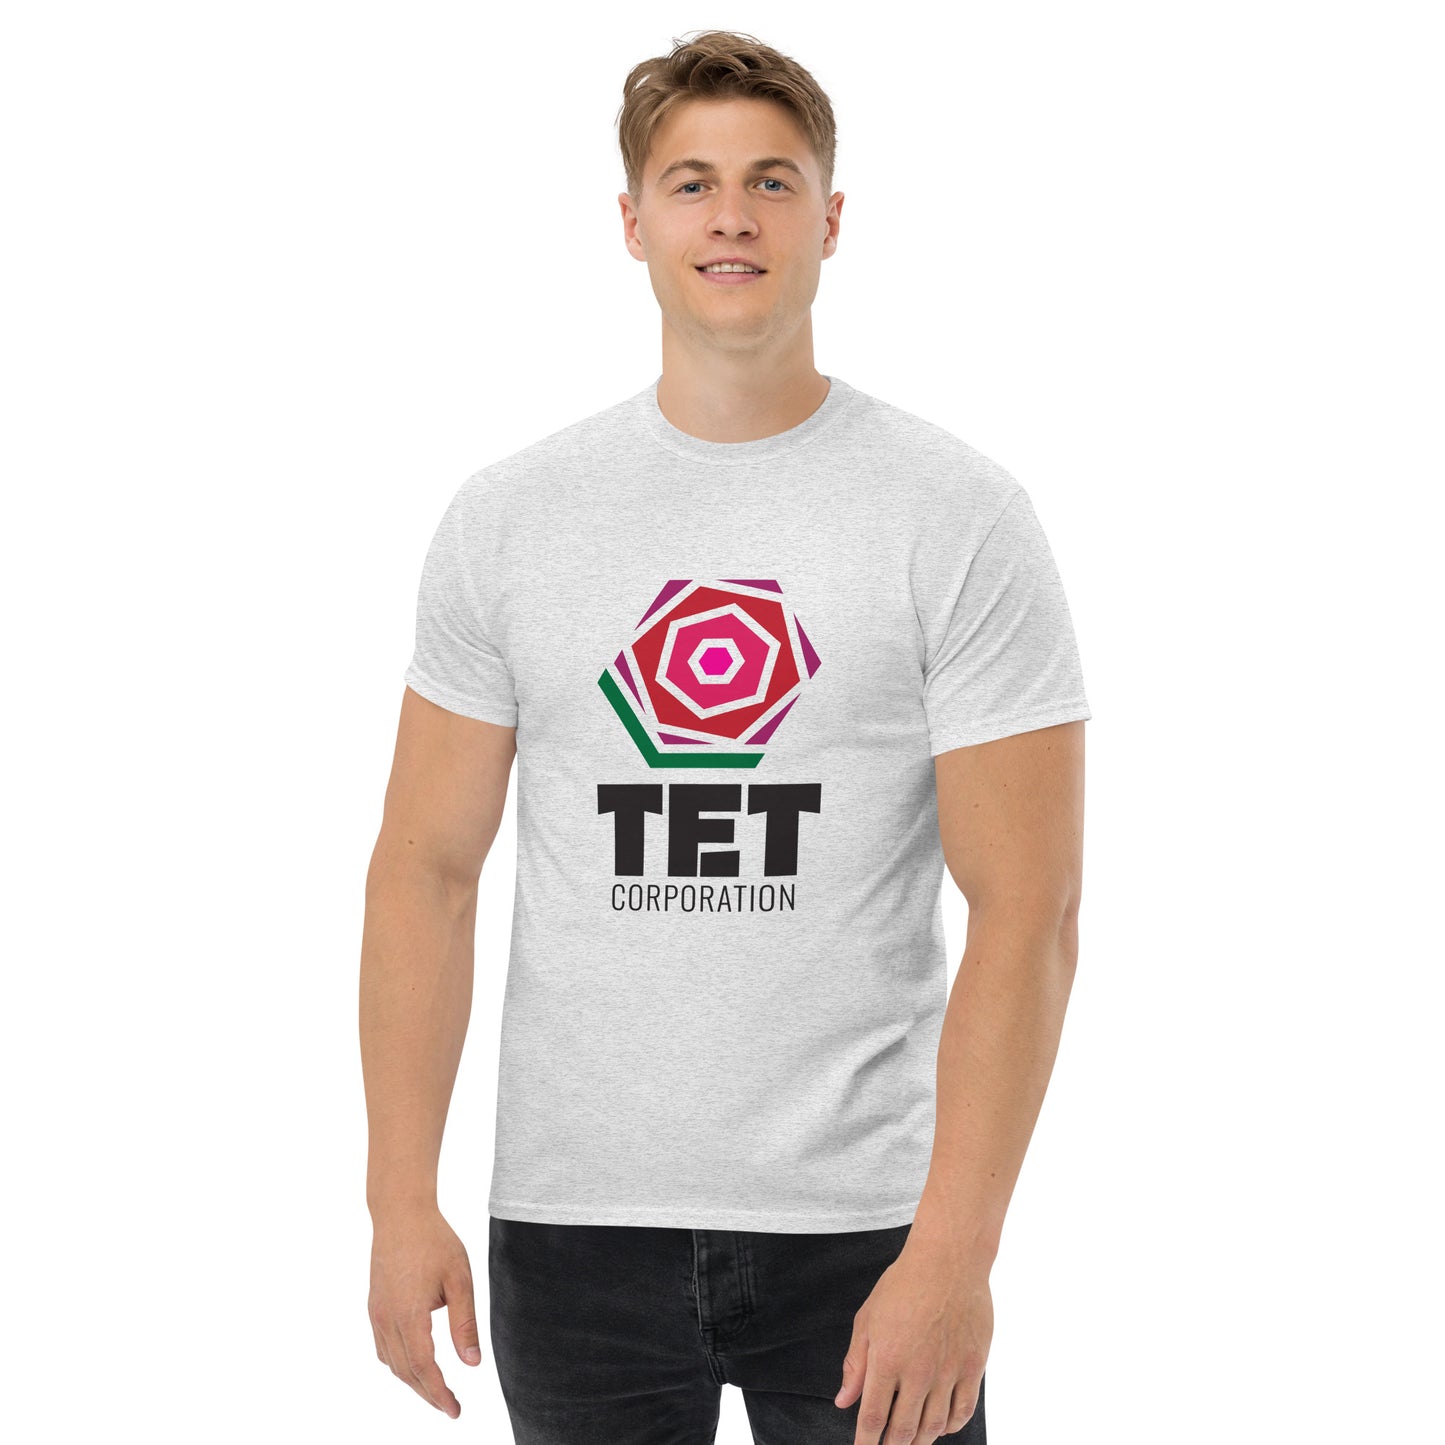 Tet Corporation T-Shirt, Black Logo, Classic Fit